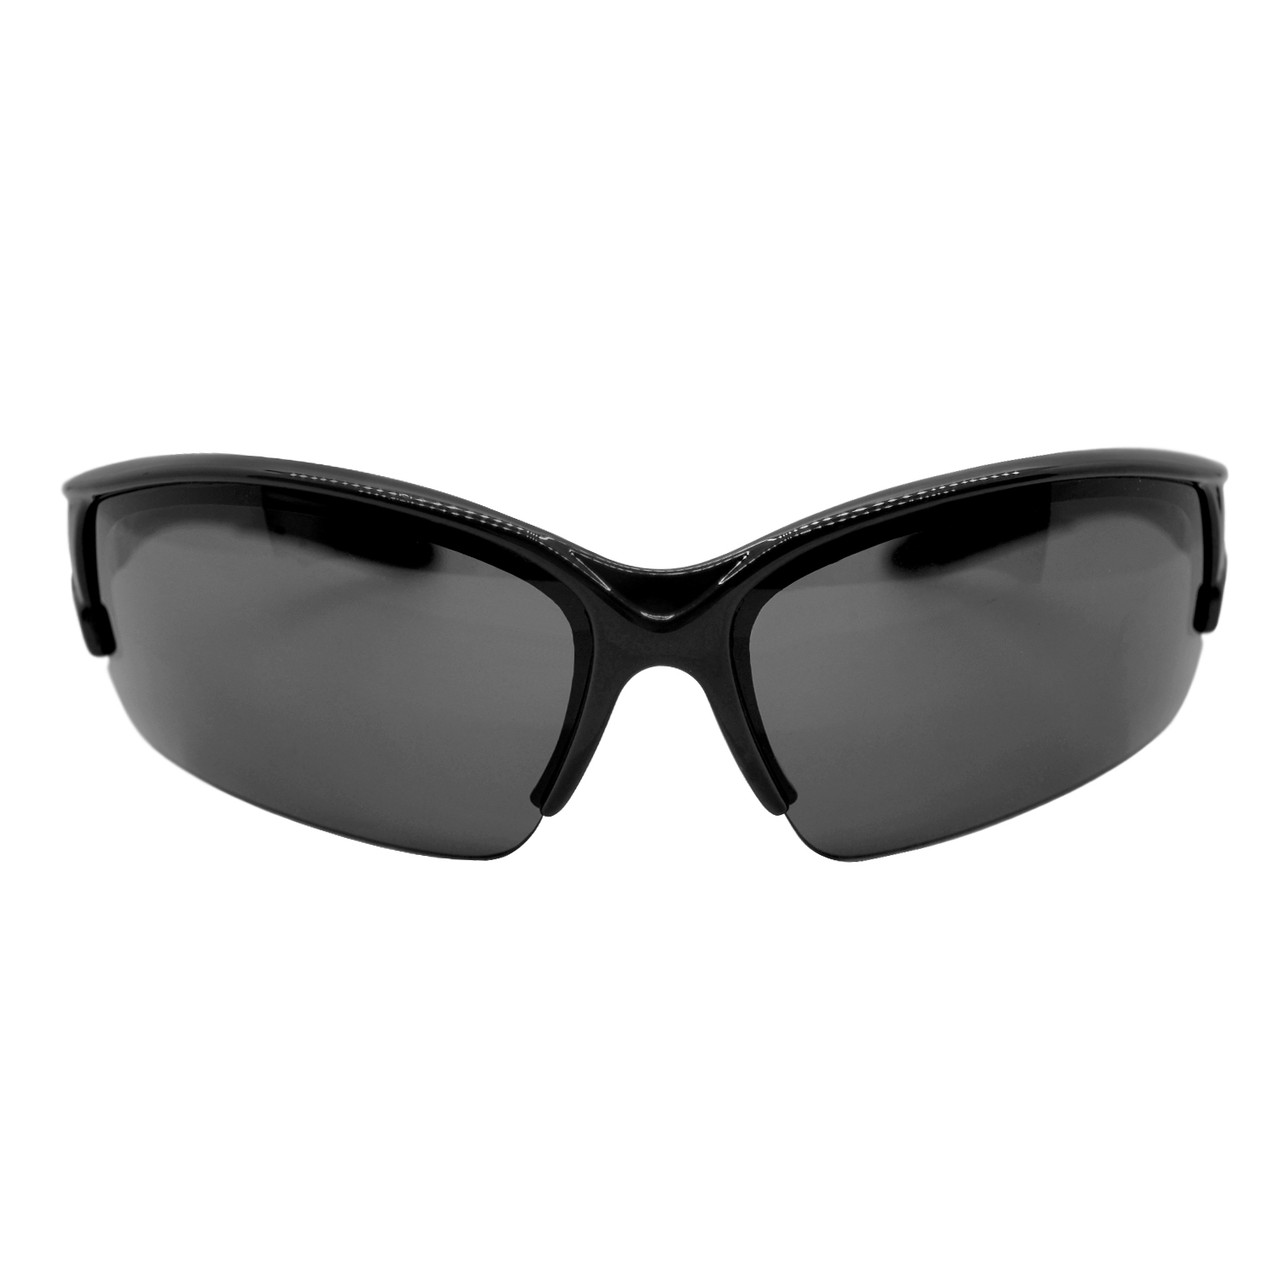 Troy Trojans Sports Rimless College Sunglasses (Black)